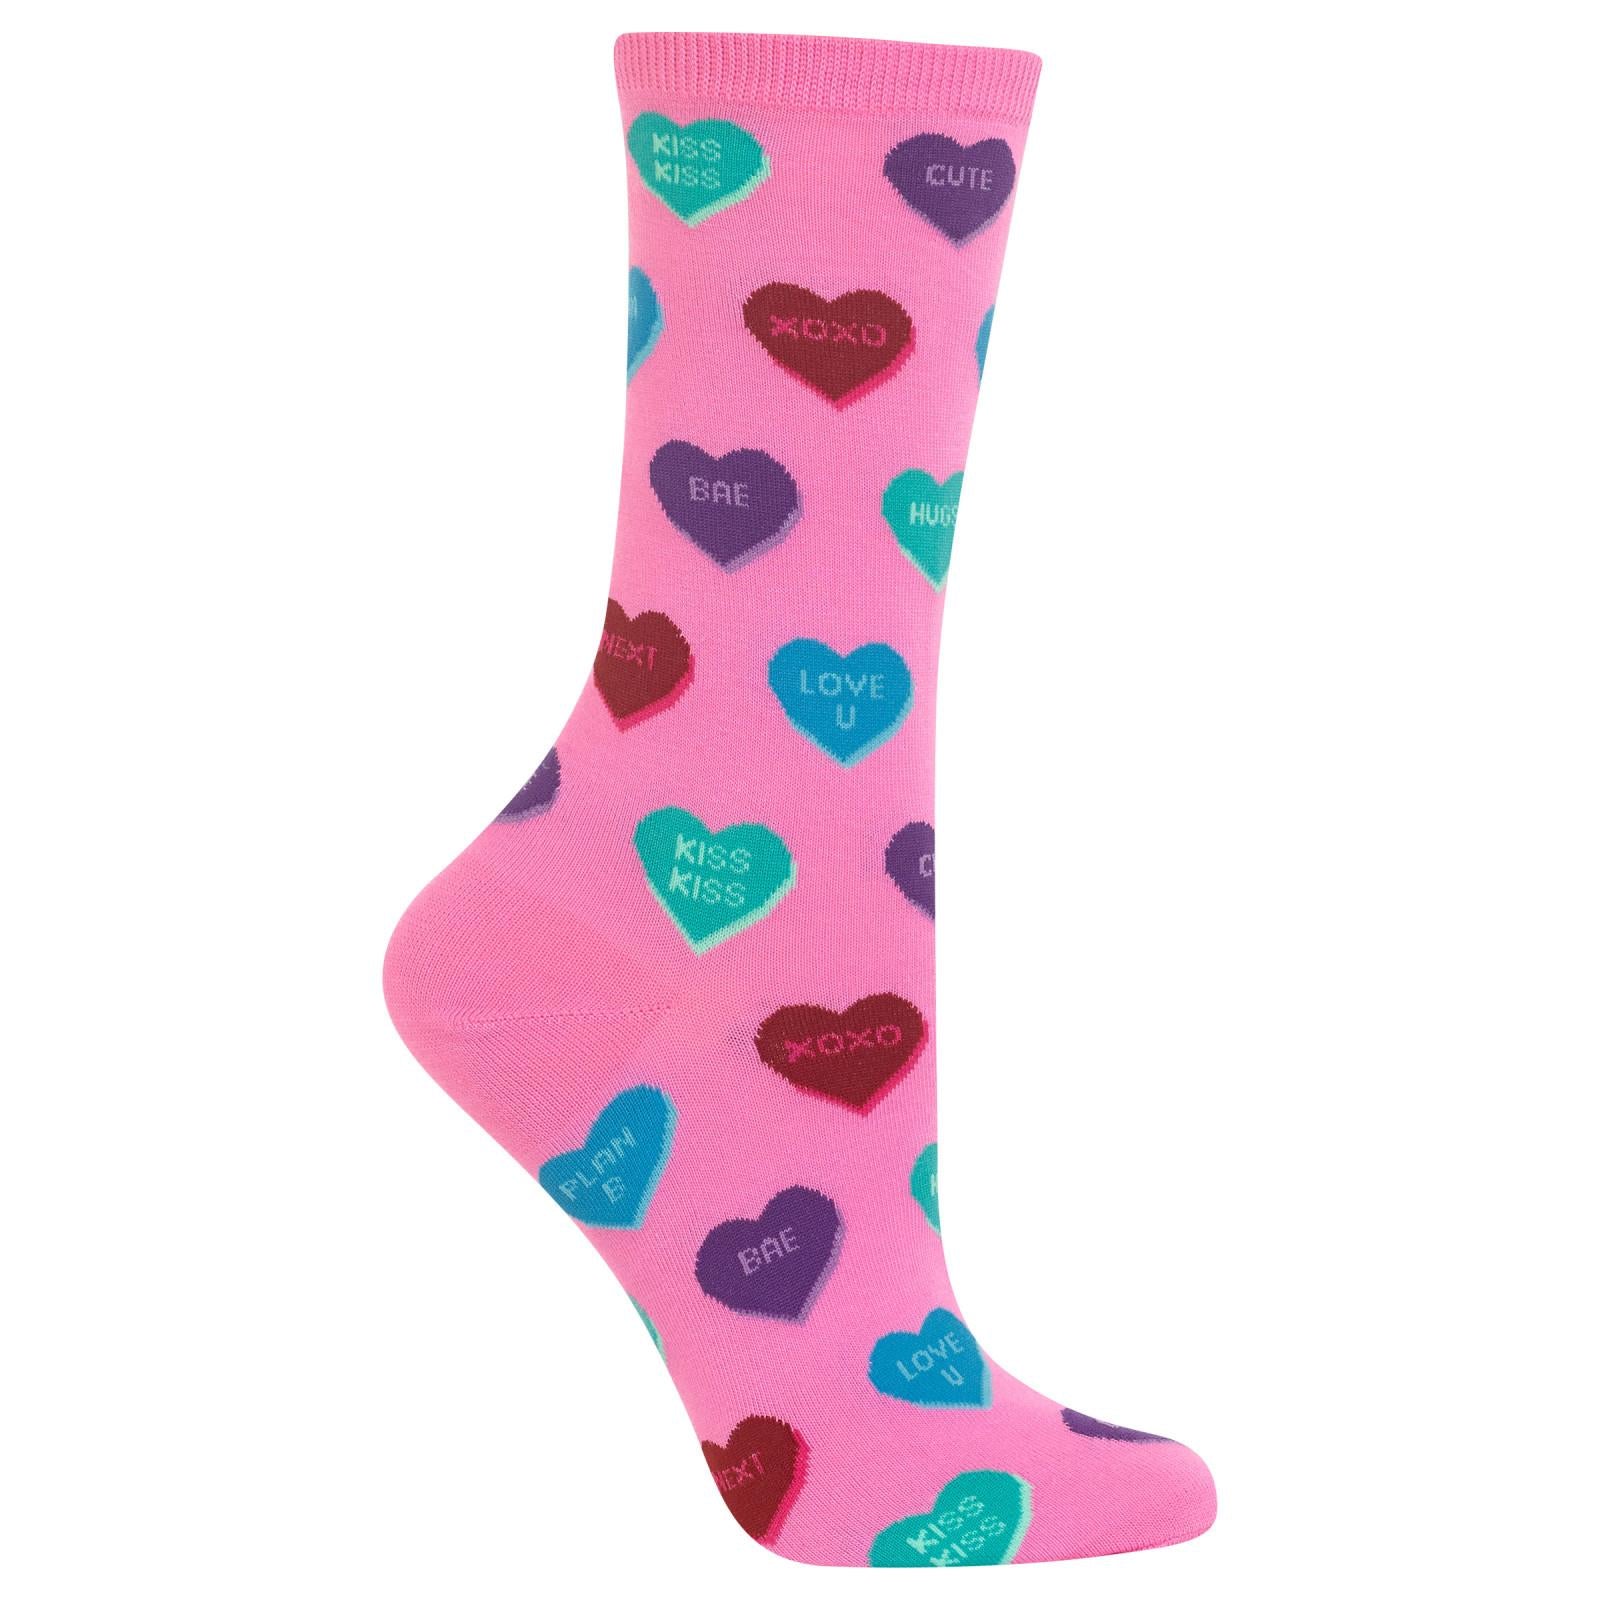 HOH00050 - Hot Sox Womens Heart Candy Crew Socks